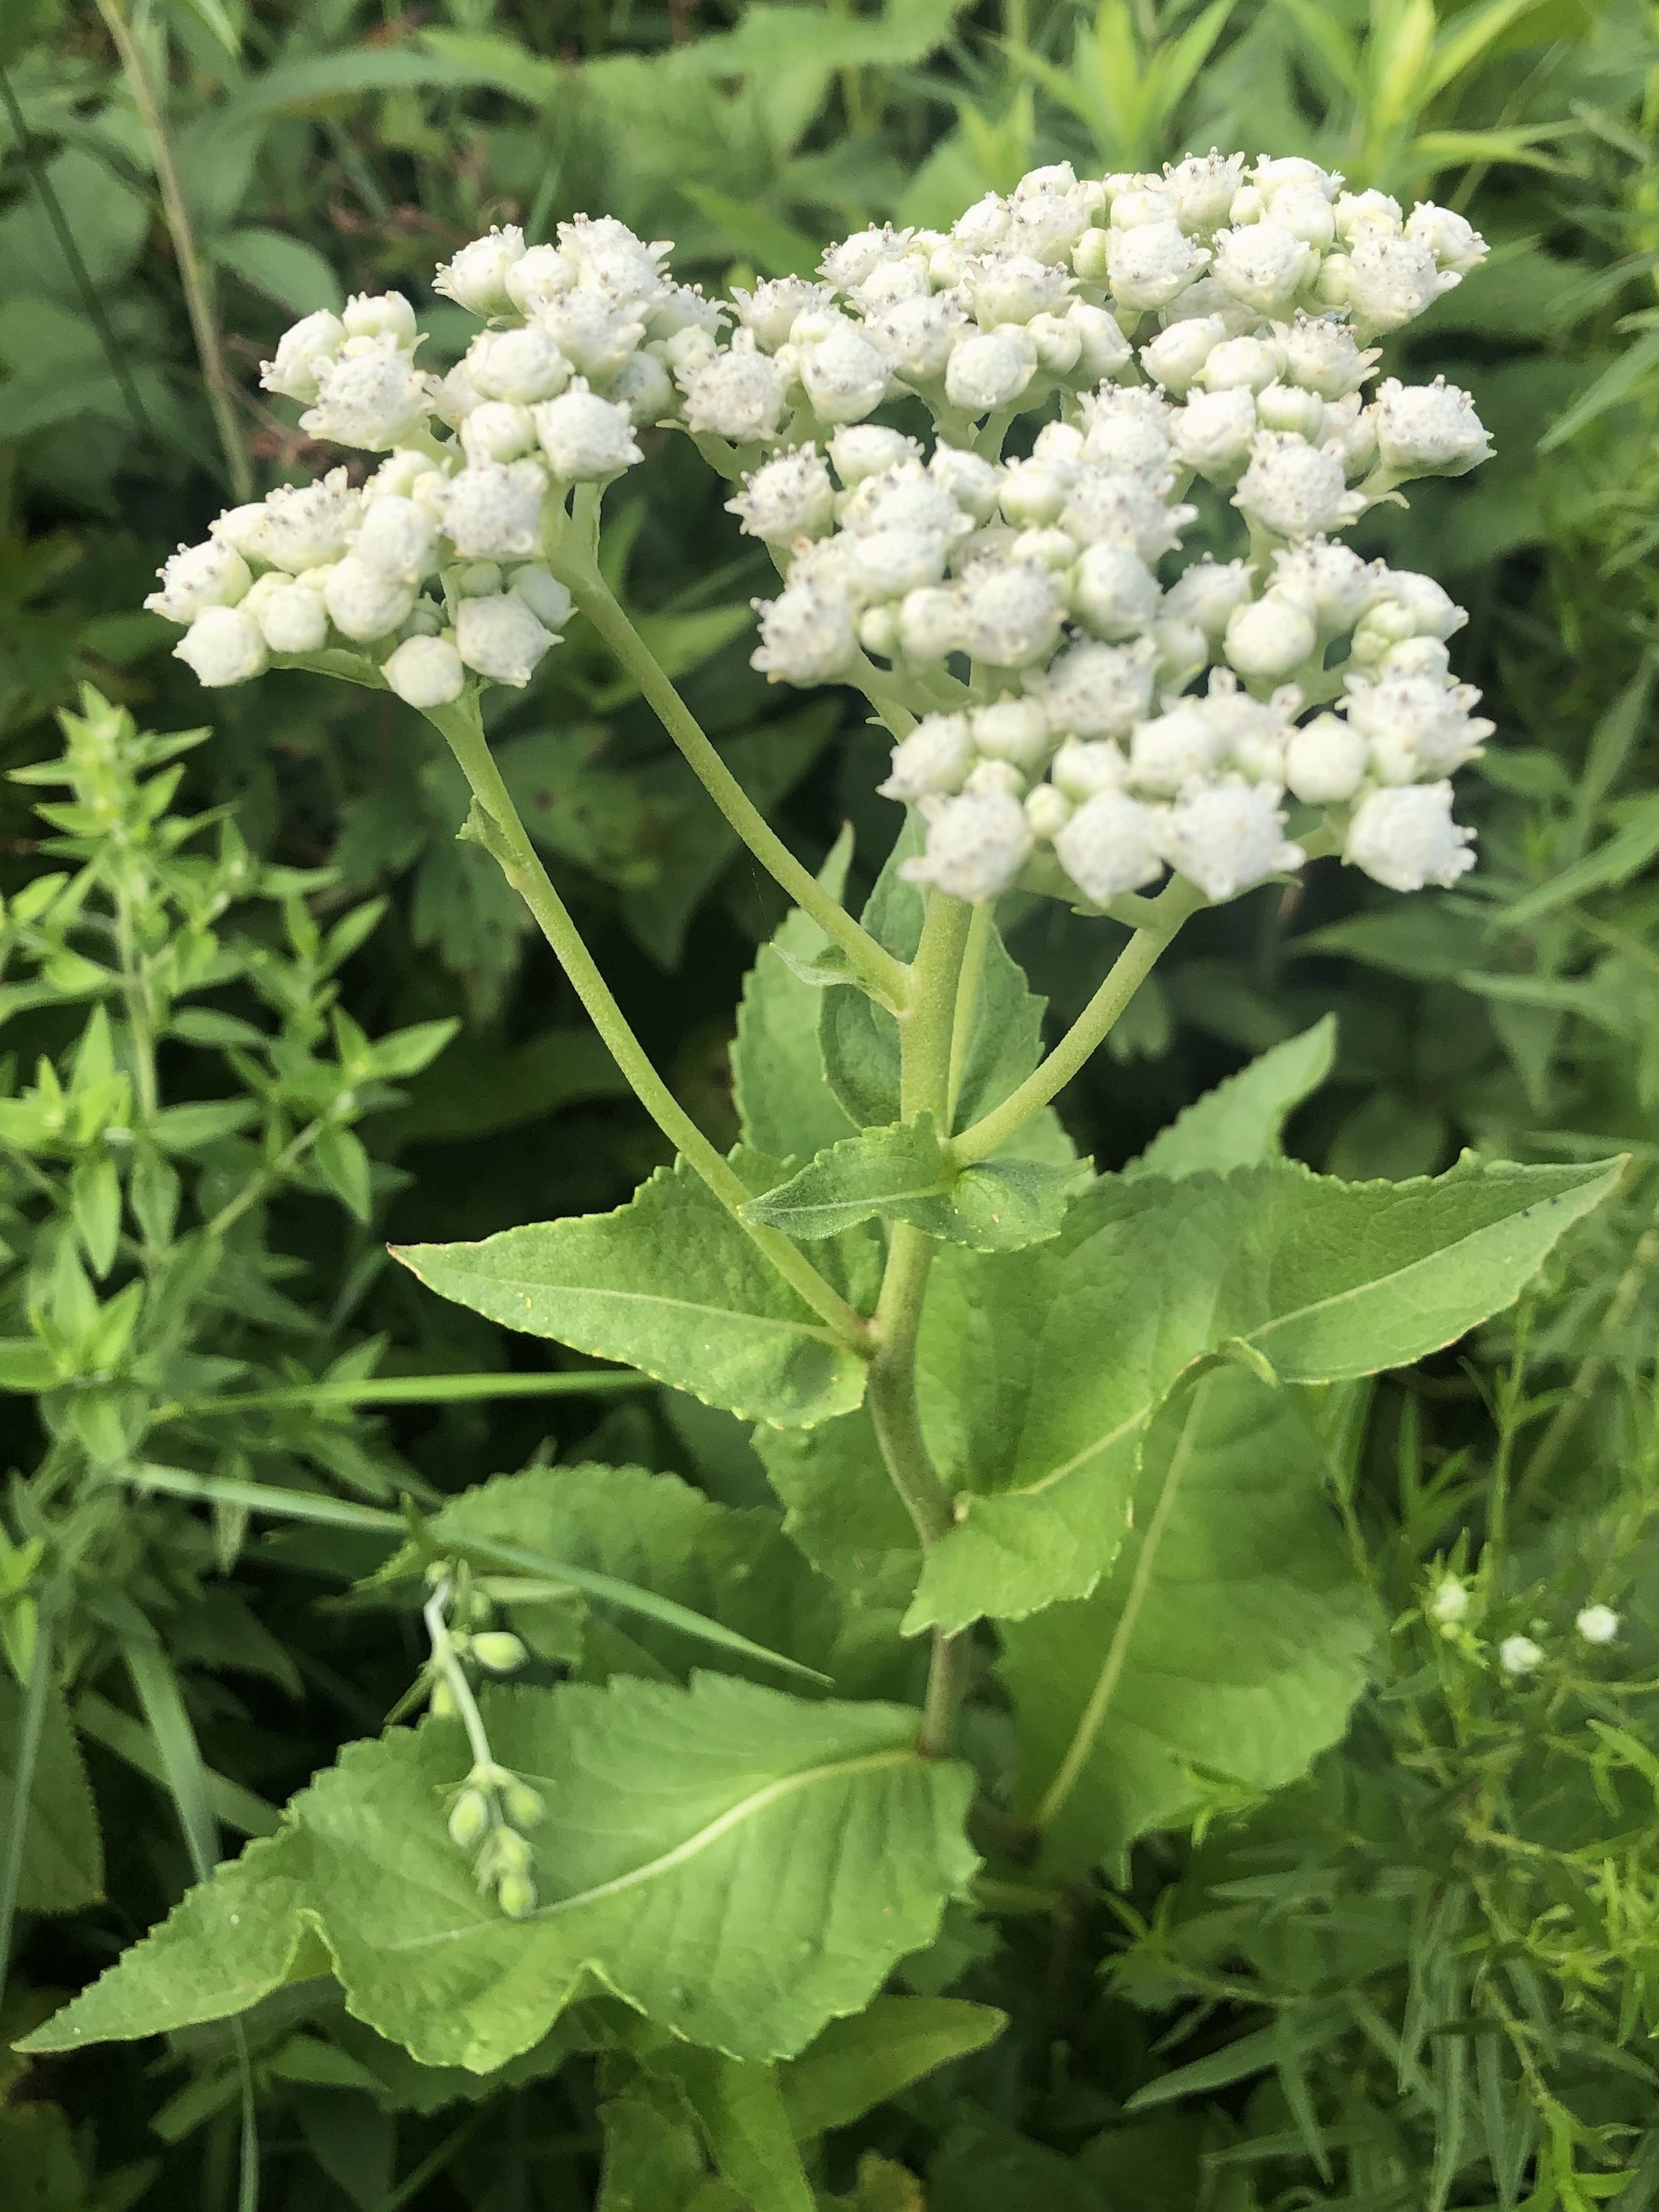 Wild Quinine in UW Arbortetum Native Gardens in Madison, Wisconsin on July 5, 2021.